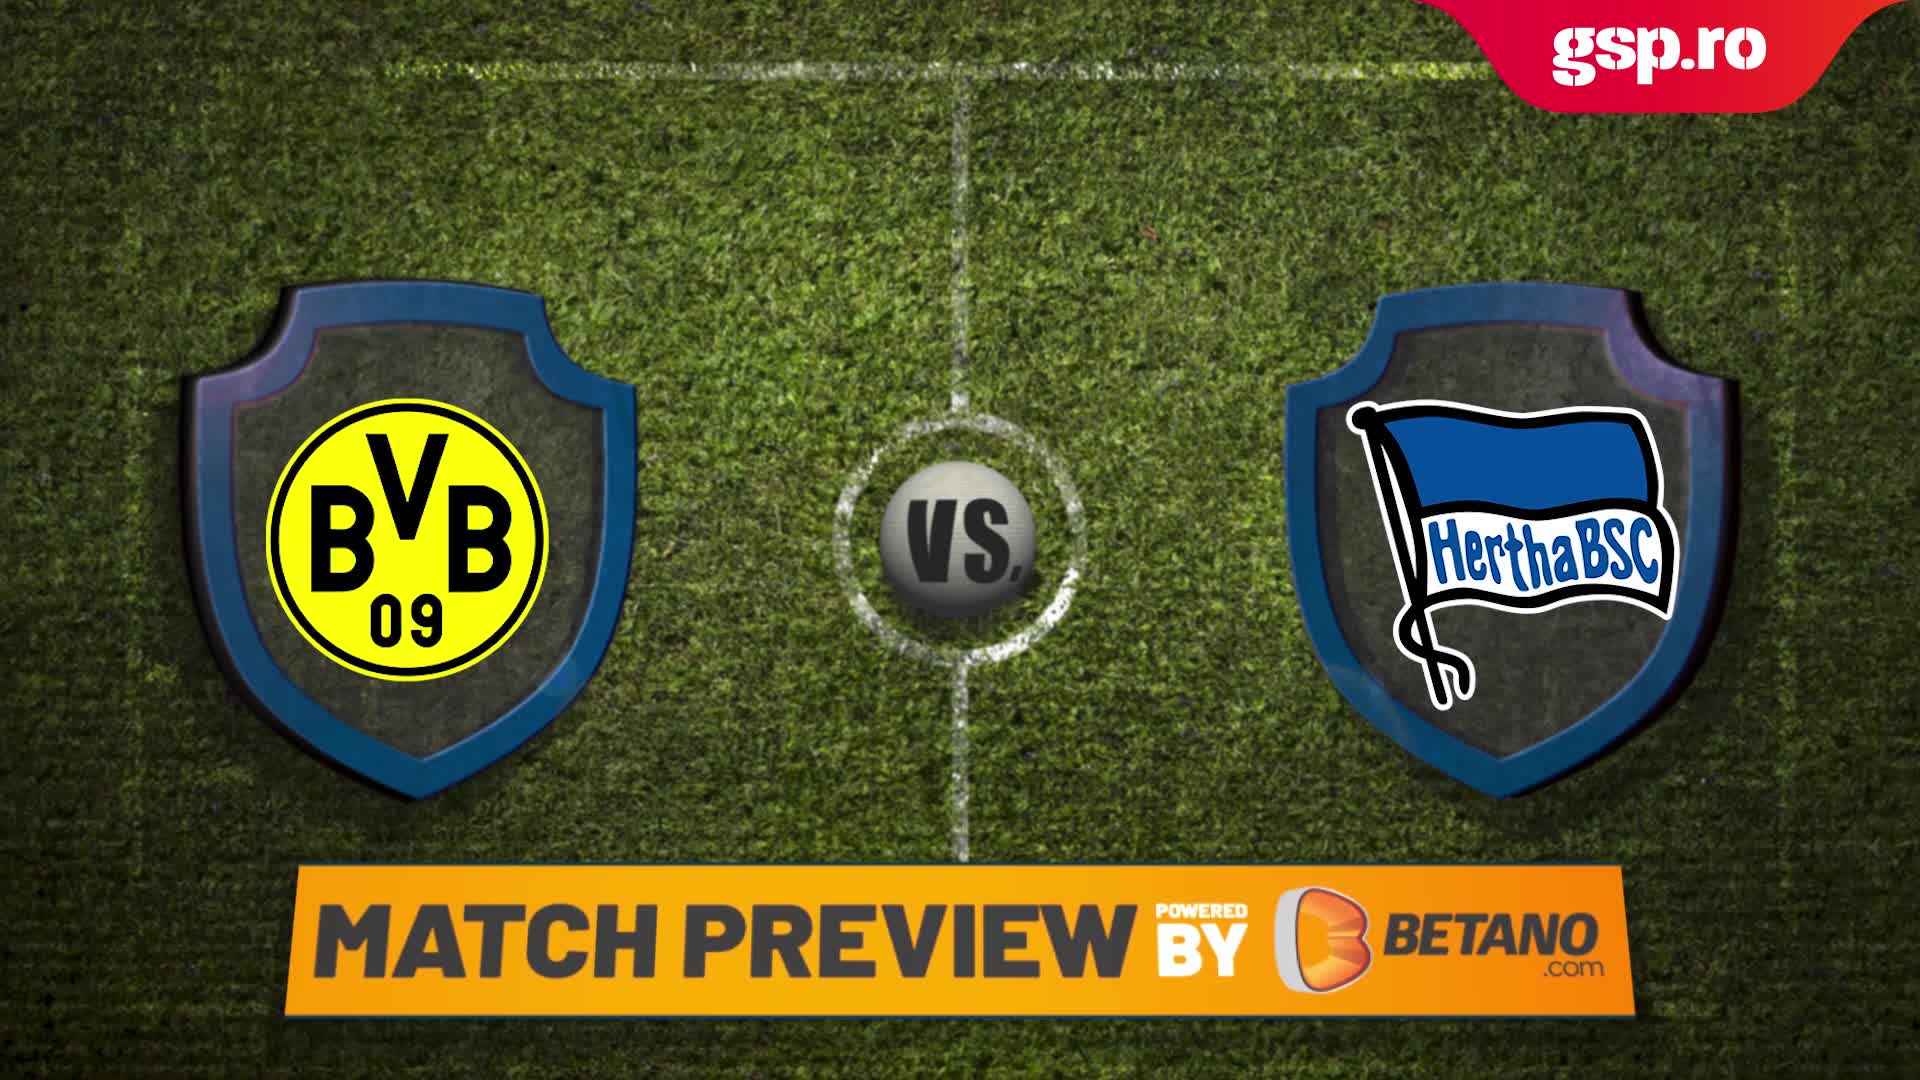  Dortmund o întâlnește pe Hertha Berlin în etapa 30 din Bundesliga